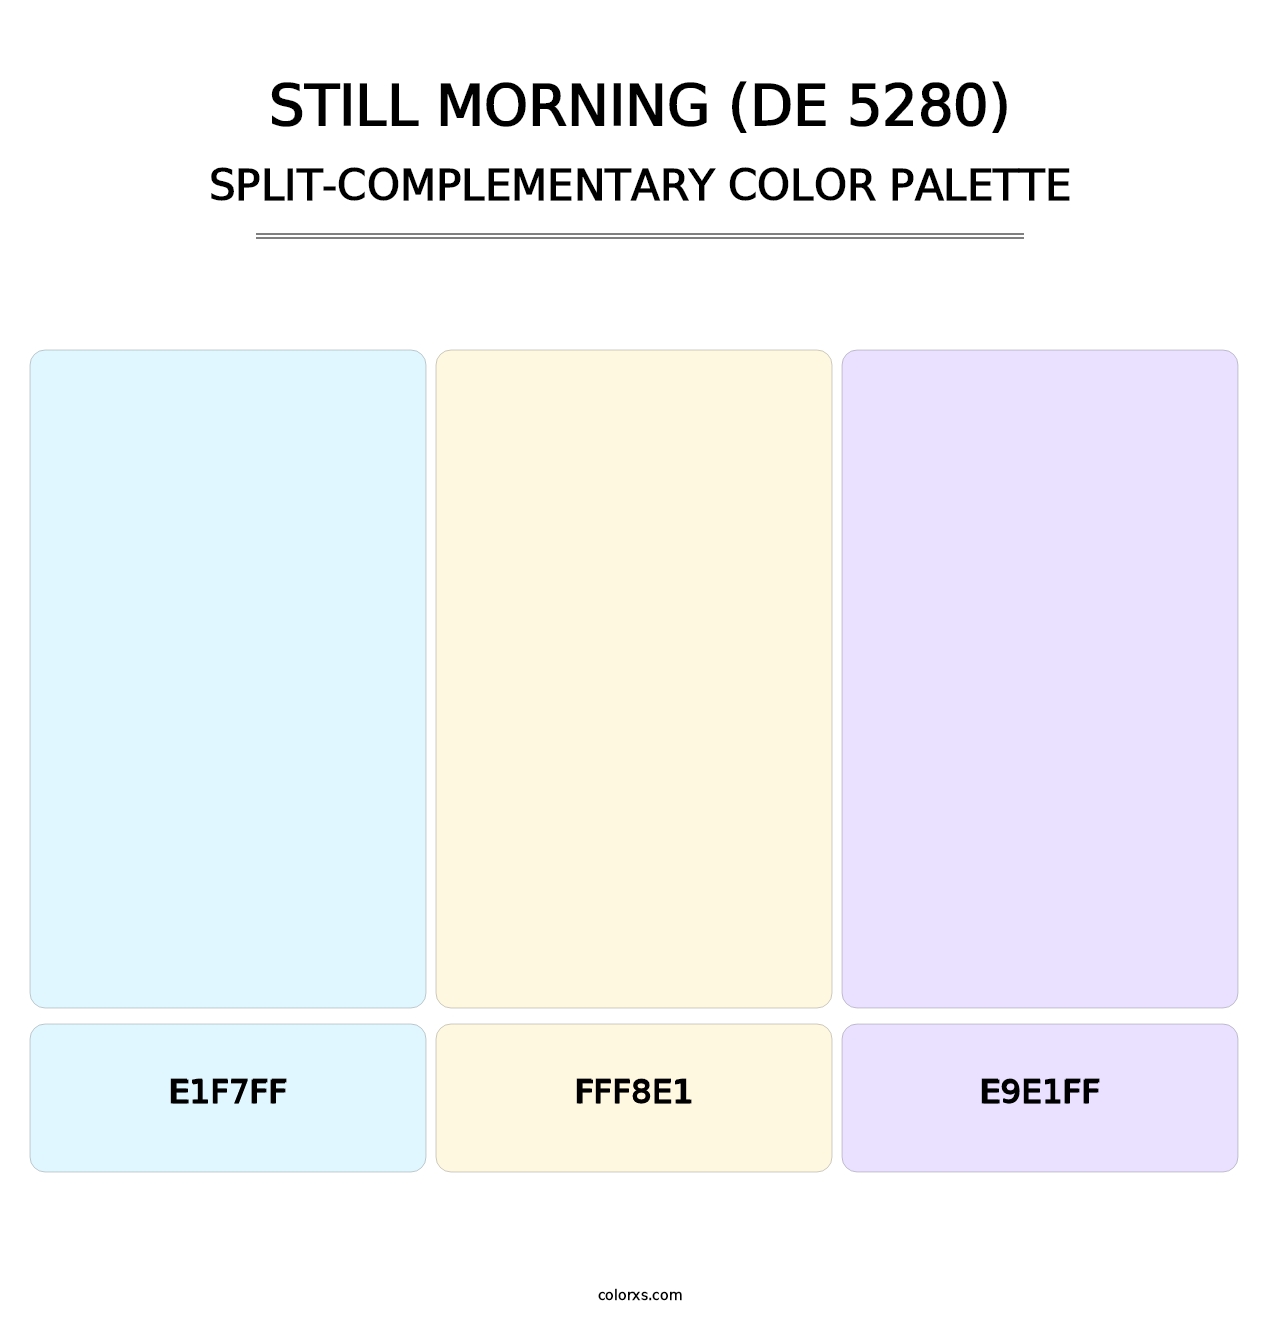 Still Morning (DE 5280) - Split-Complementary Color Palette